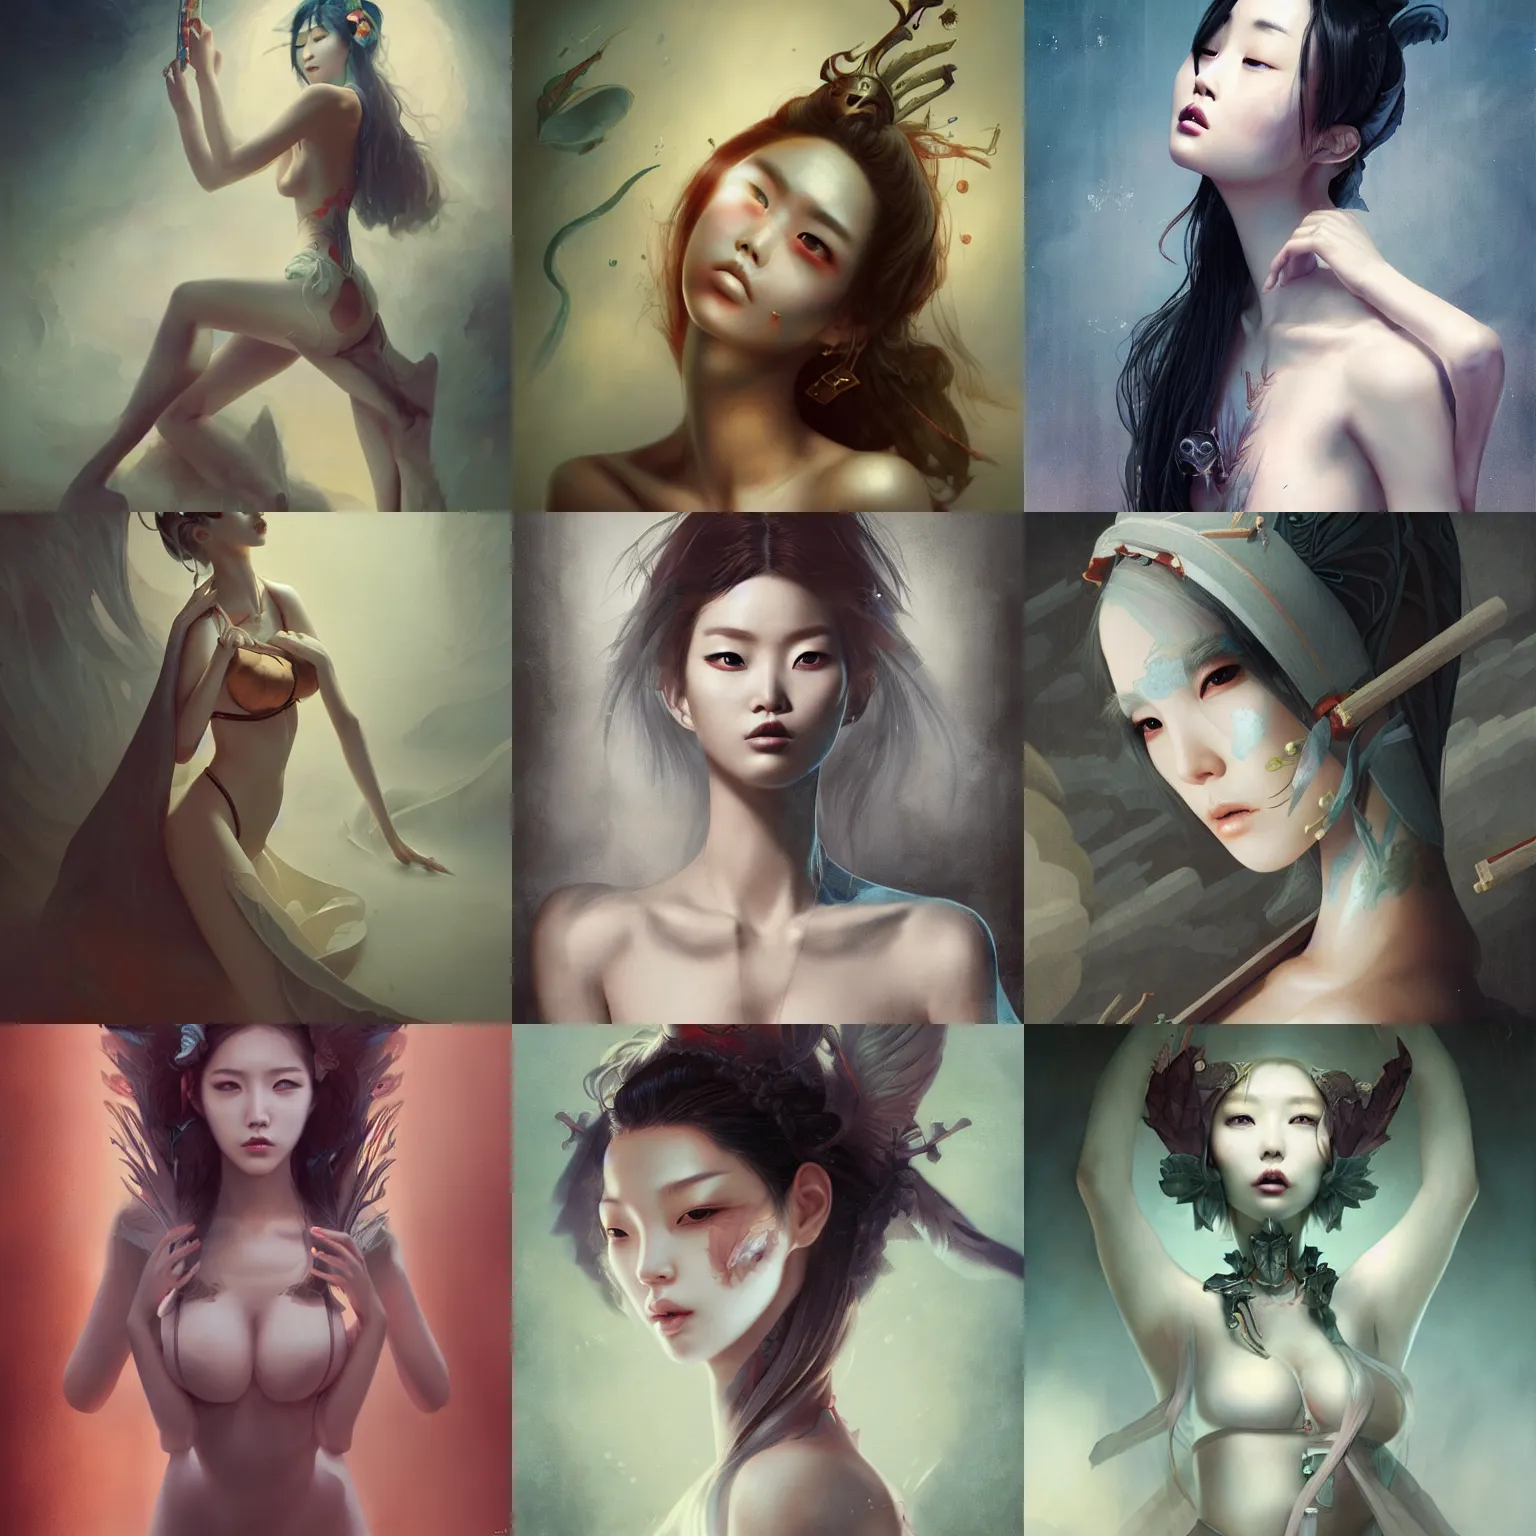 Prompt: lee jin - eun by sakimichan, mark simonetti, peter mohrbacher, nixeu, rule of thirds, seductive look, beautiful